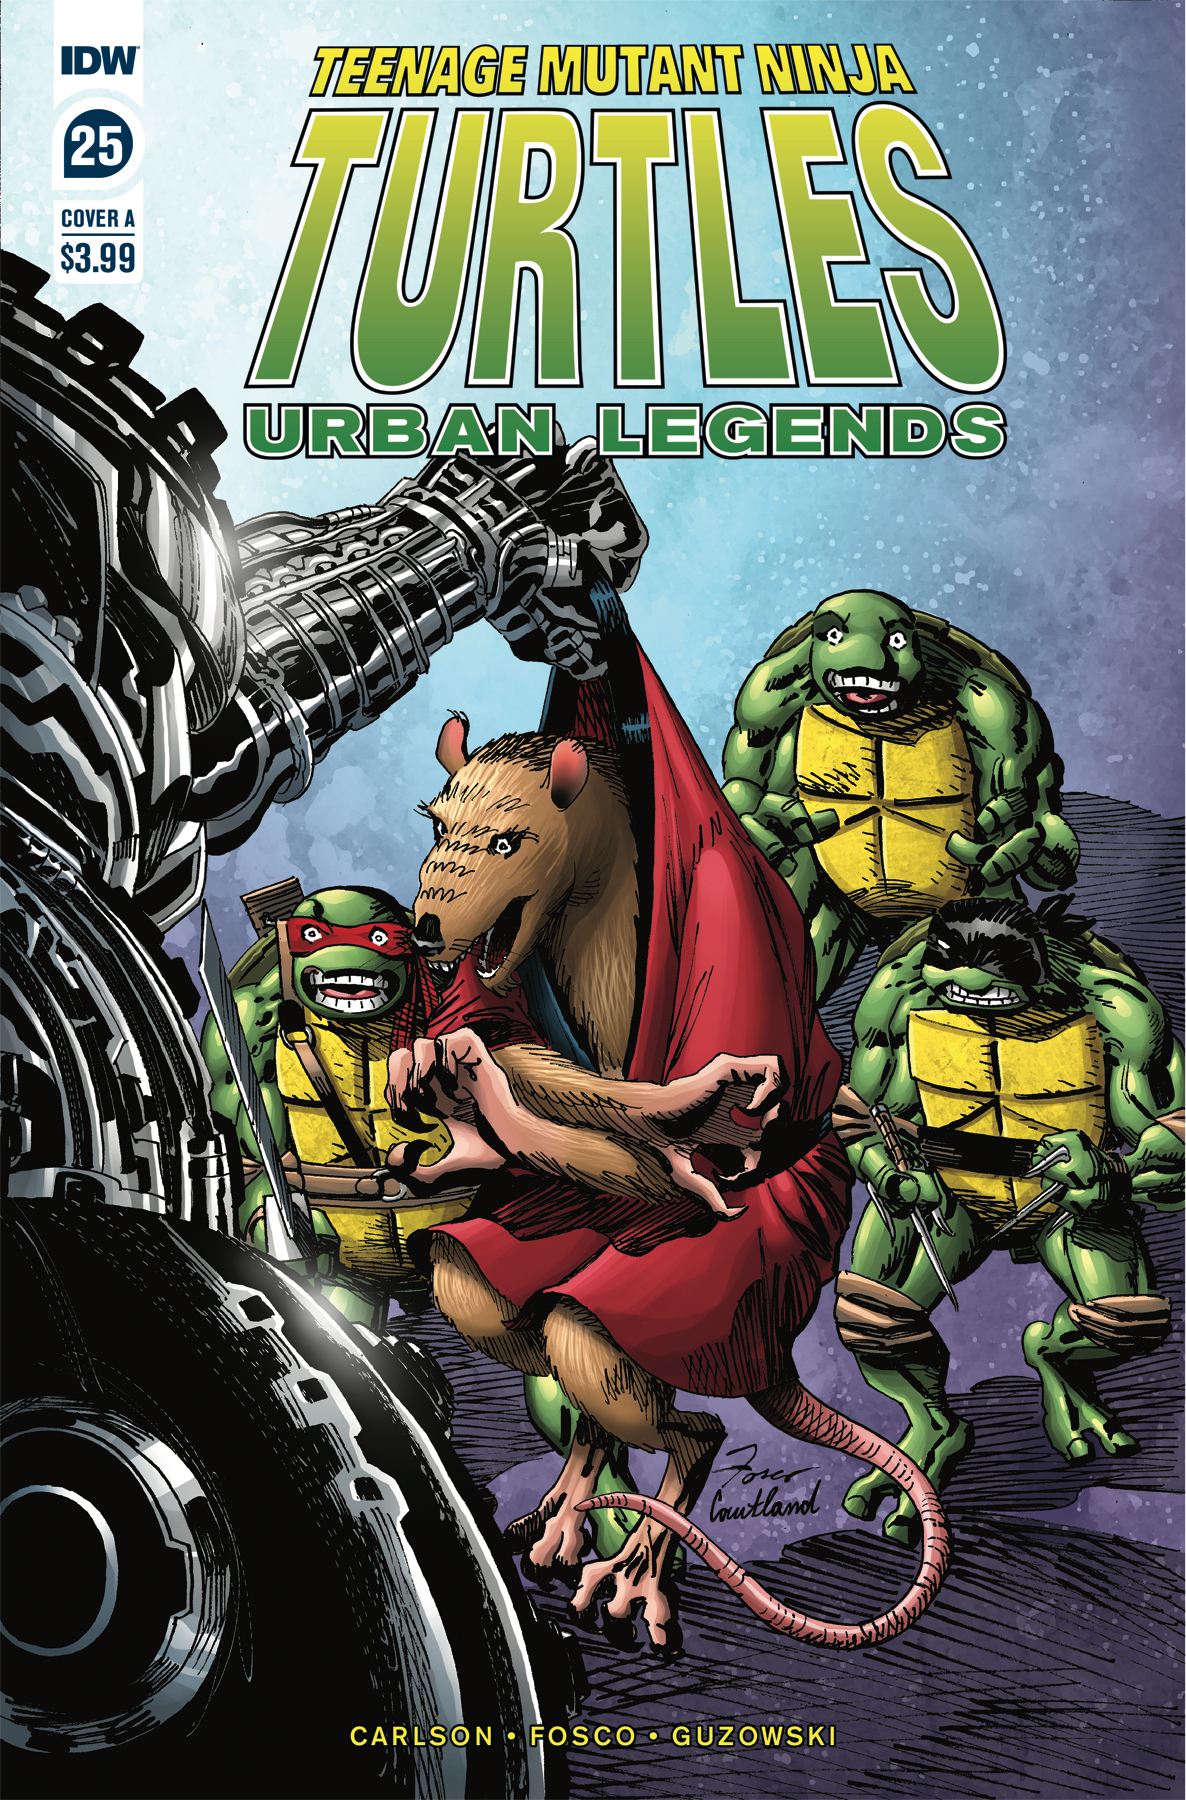 Teenage Mutant Ninja Turtles Urban Legends #25 Cover A Fosco